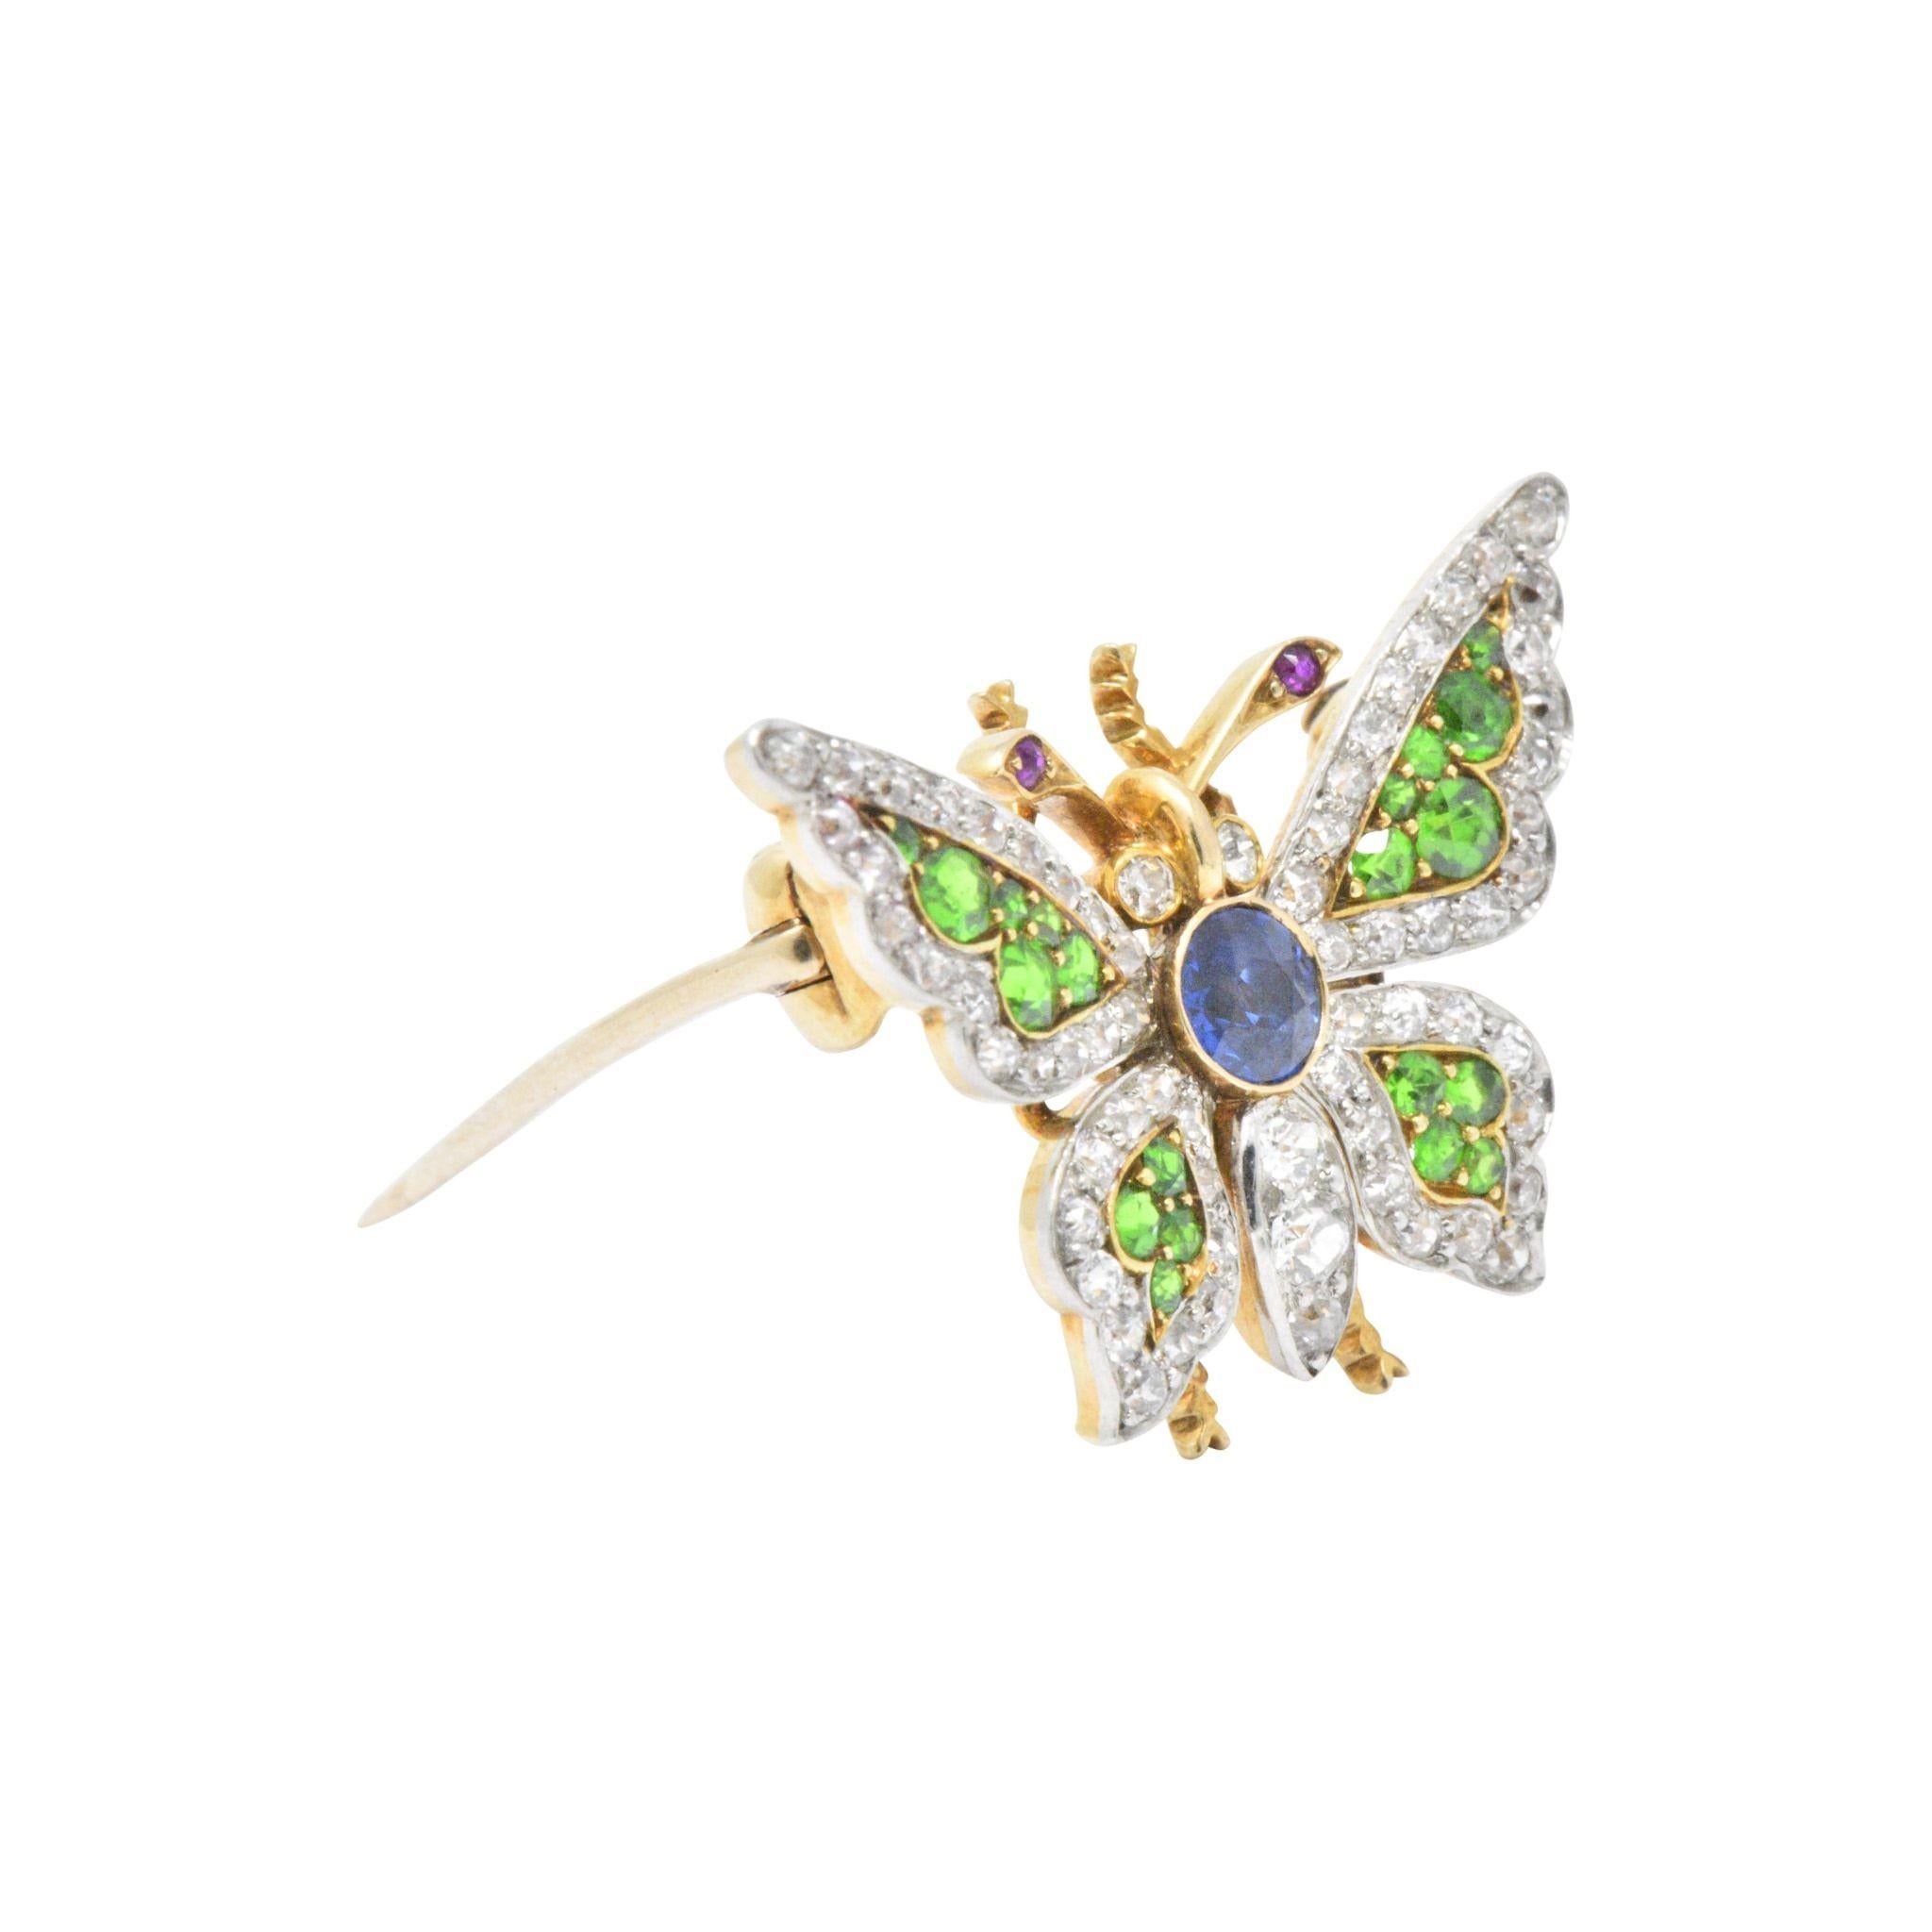 Designed as butterfly centering a round cut vivid blue sapphire weighing 0.30 carats
Old Mine cut demantoid garnet 